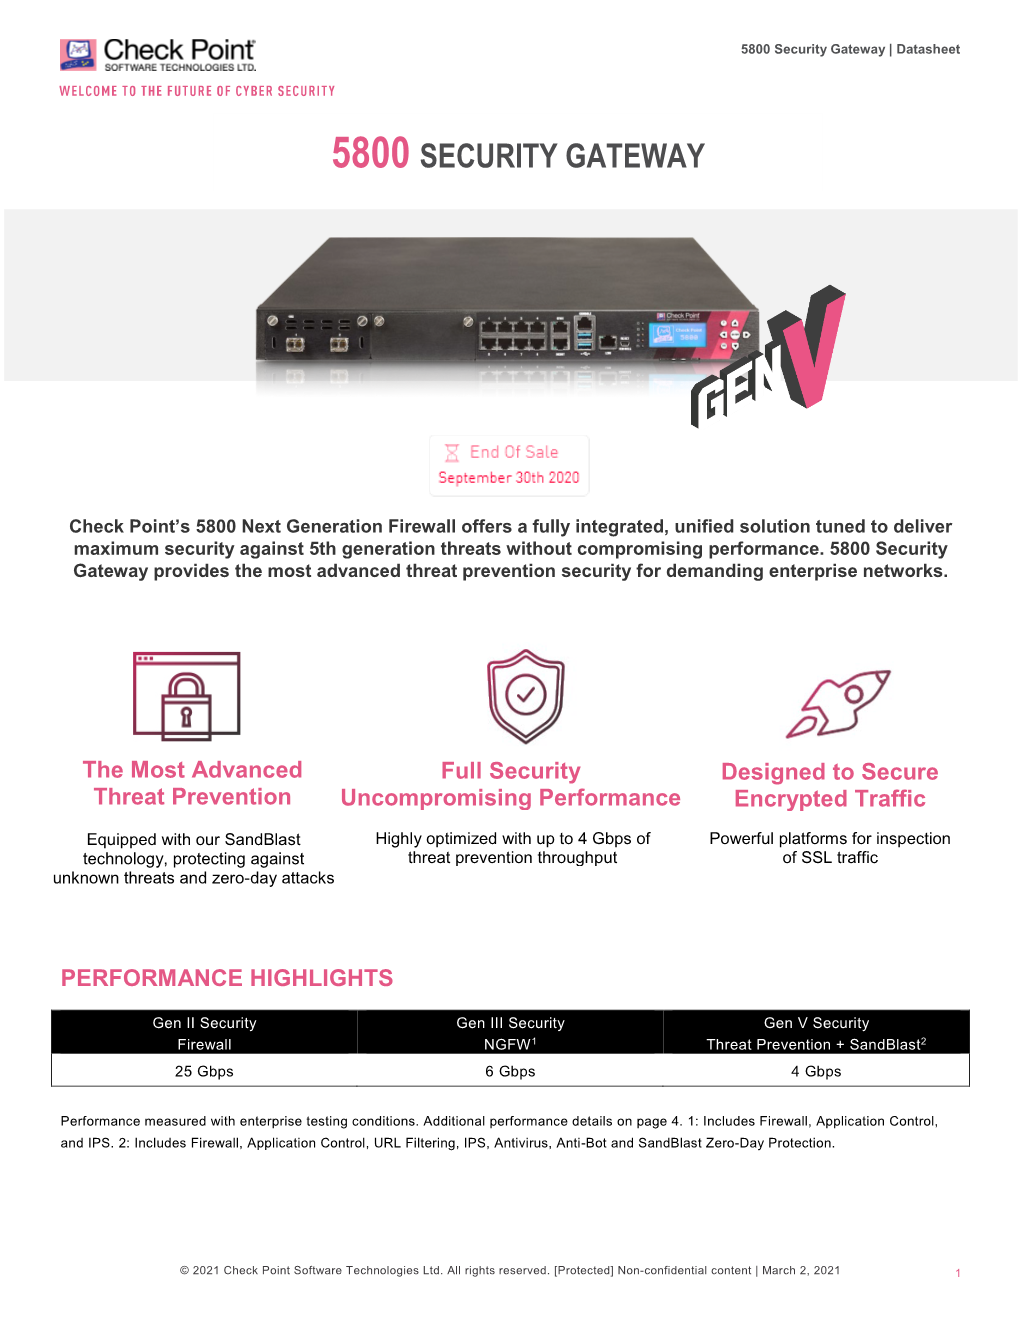 Check Point 5800 Security Gateway Datasheet